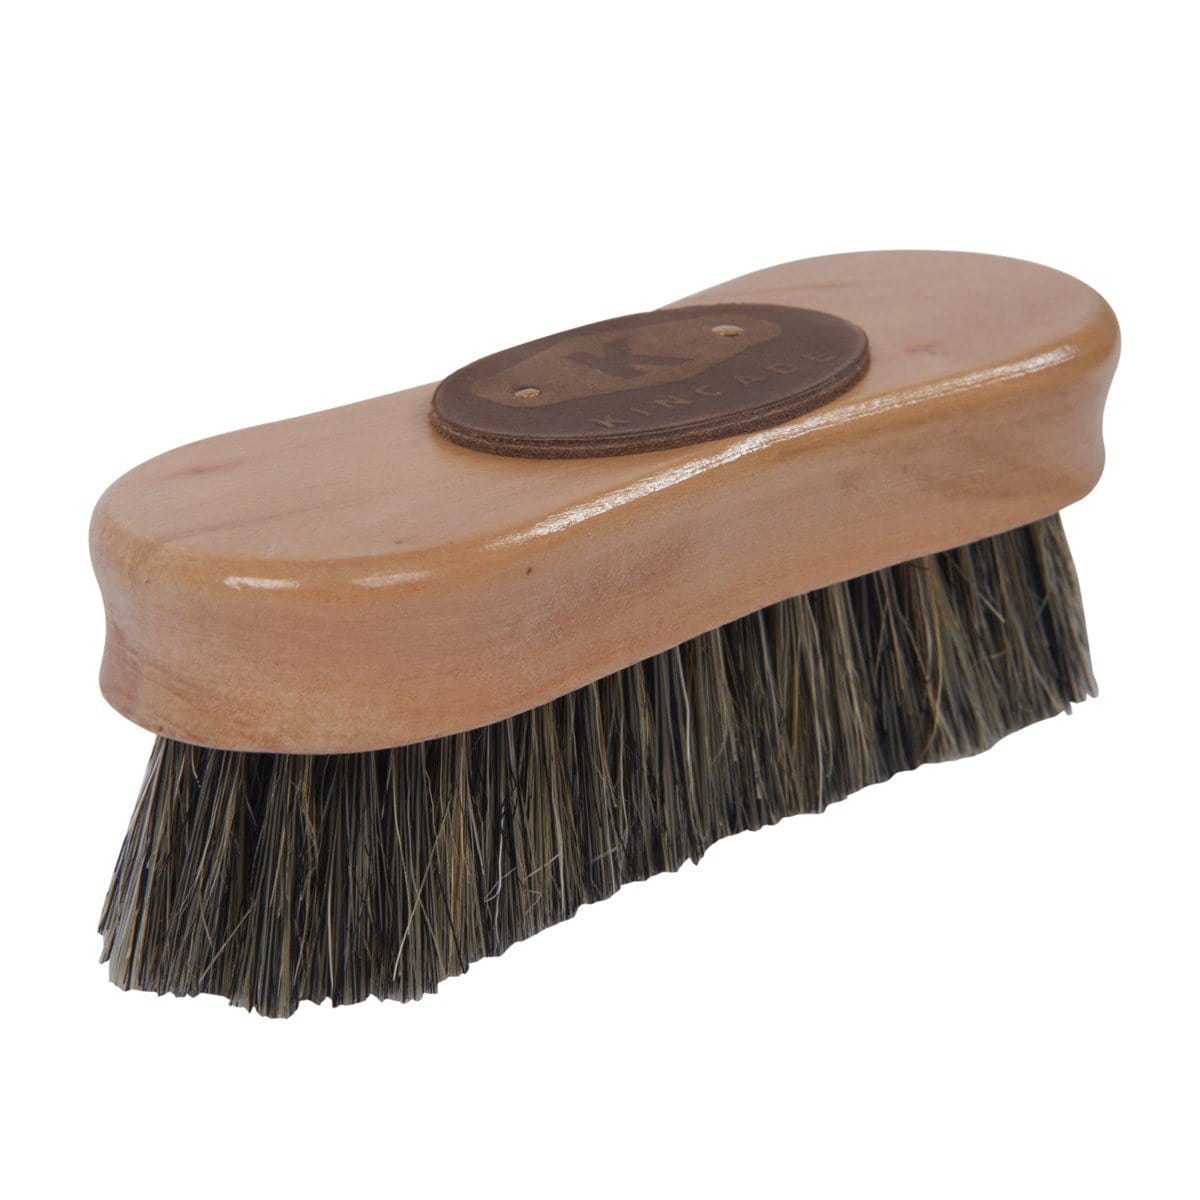 Kincade Wooden Deluxe Face Brush